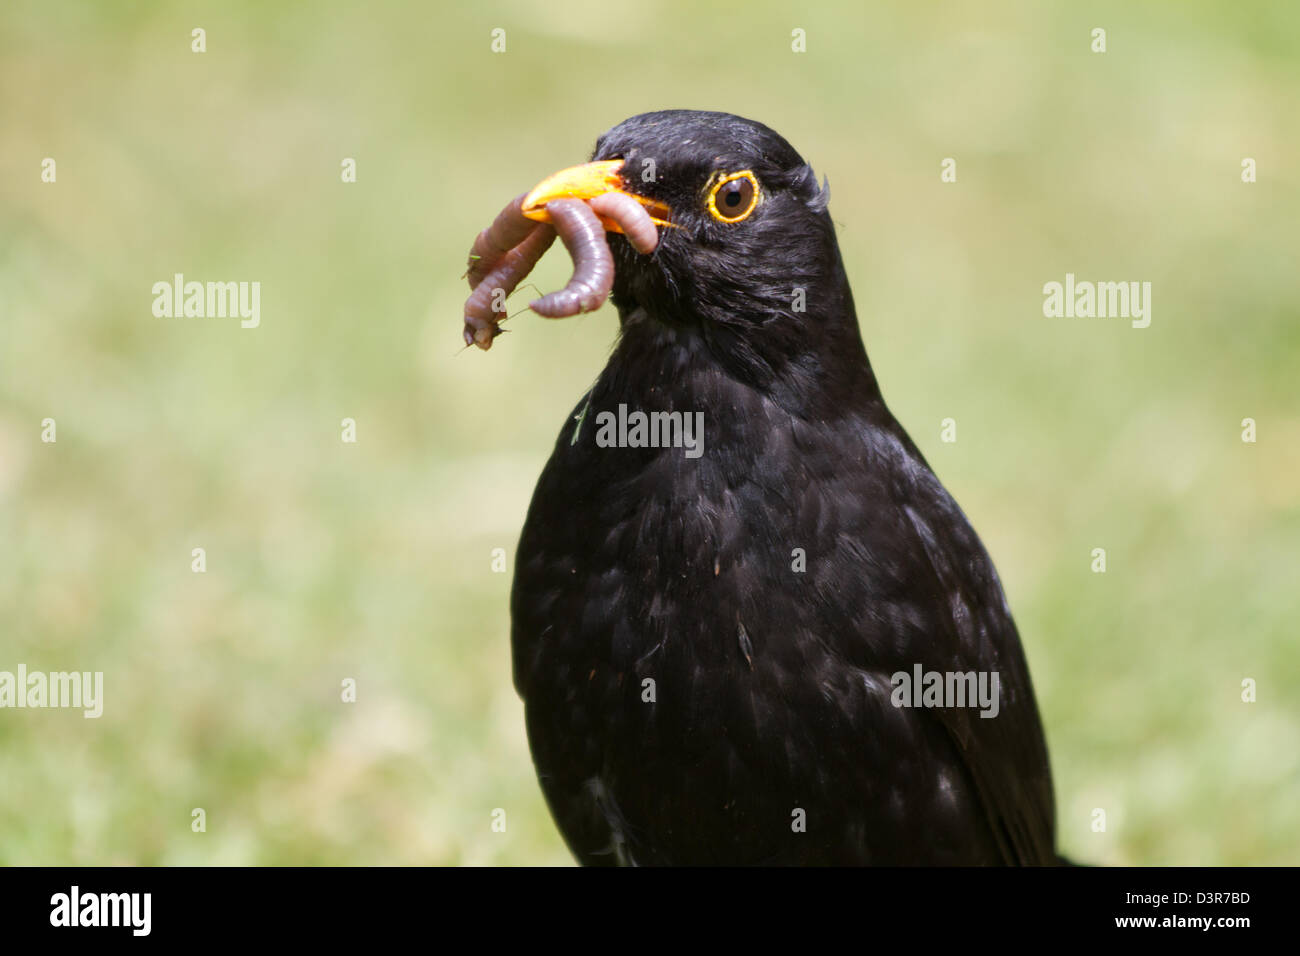 Male Blackbird carrying two worms in beak Stock Photo